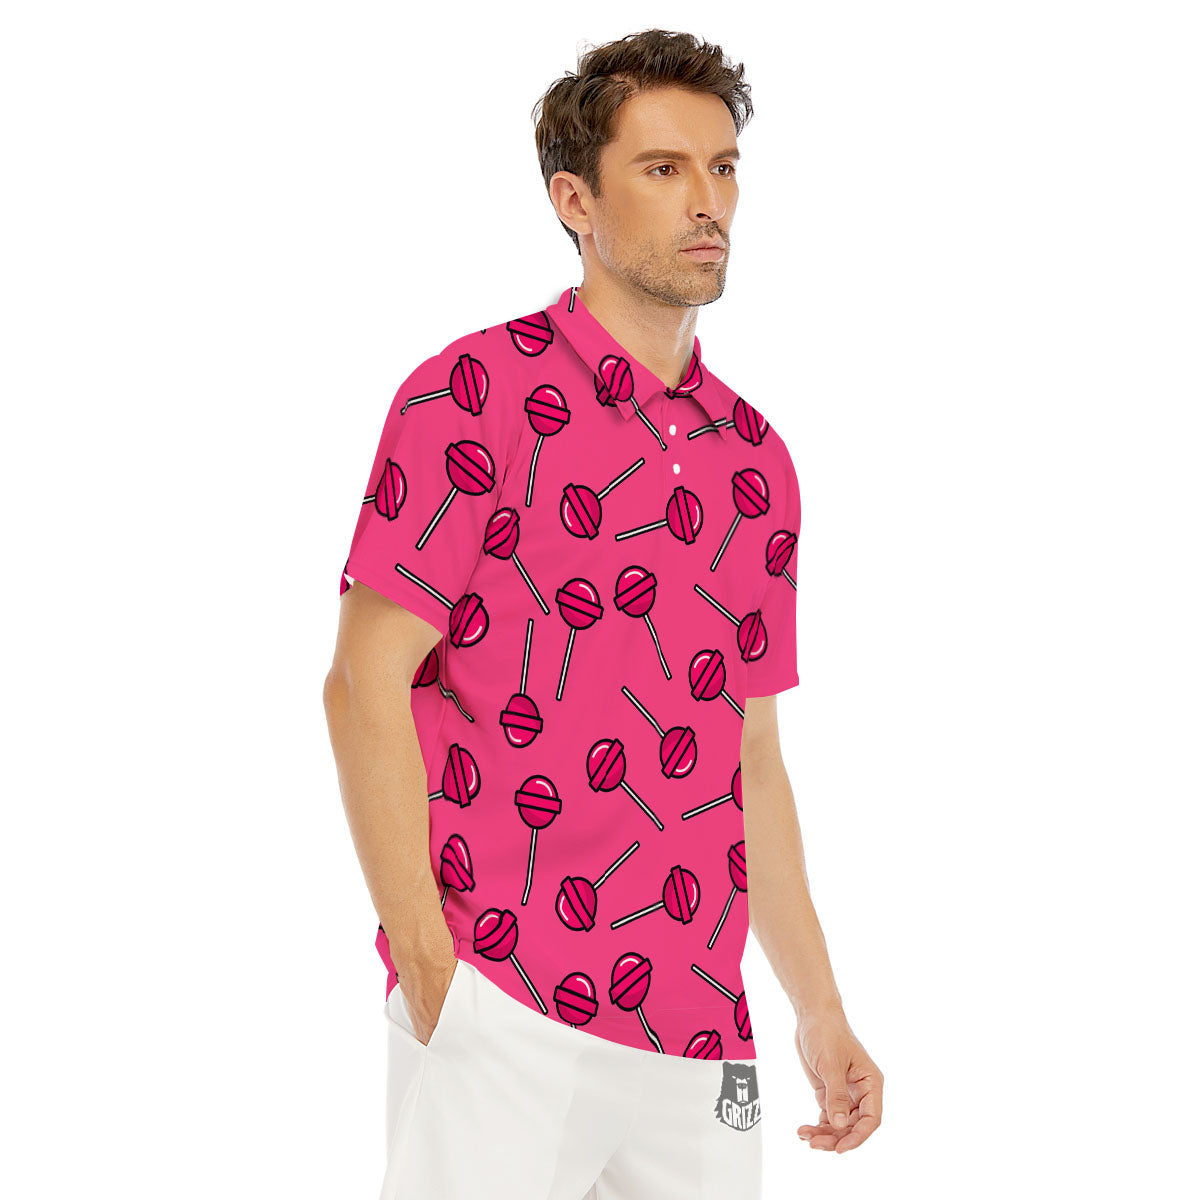 Lollipop Candy Pink Print Pattern Men's Golf Shirts-grizzshop